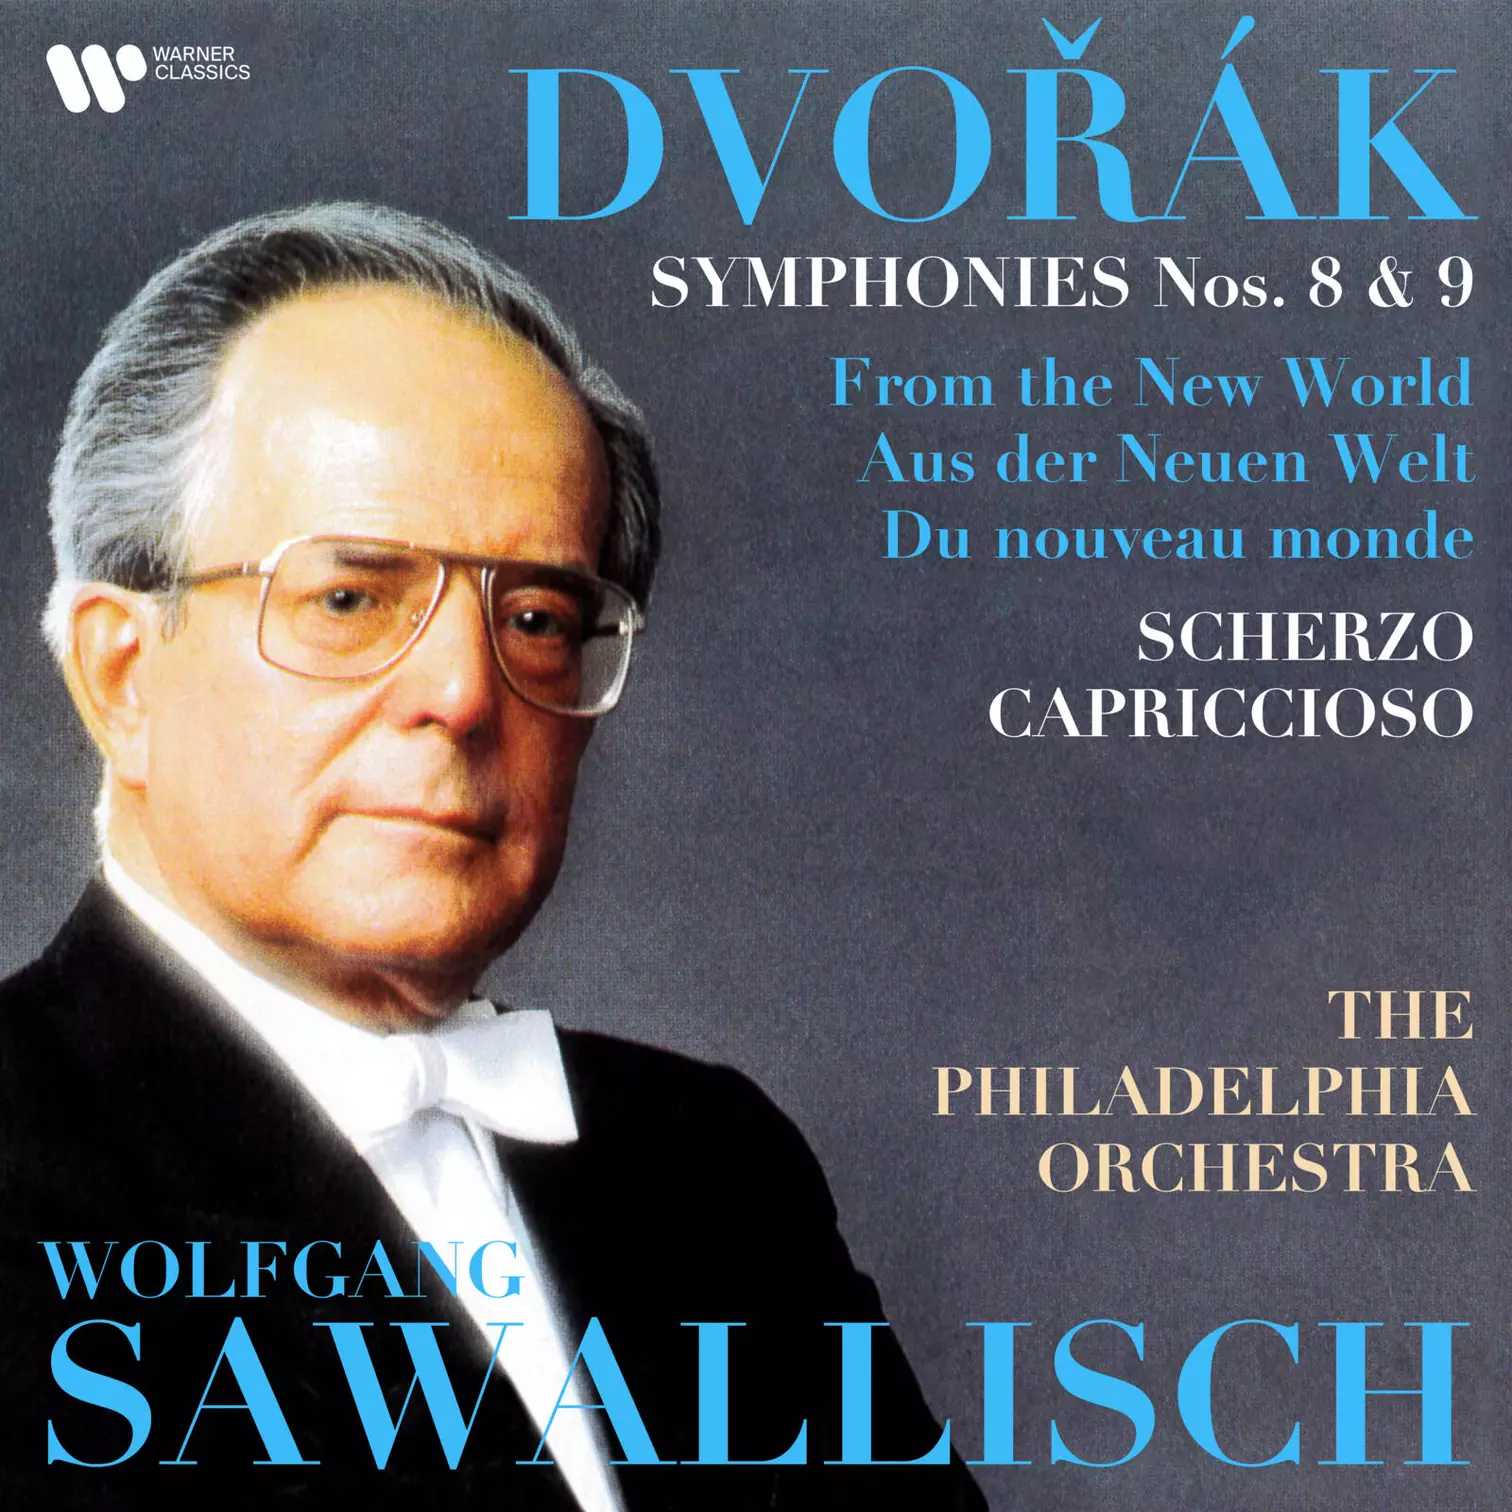 Dvořák: Scherzo capriccioso & Symphonies Nos. 8 & 9 “From the New World”